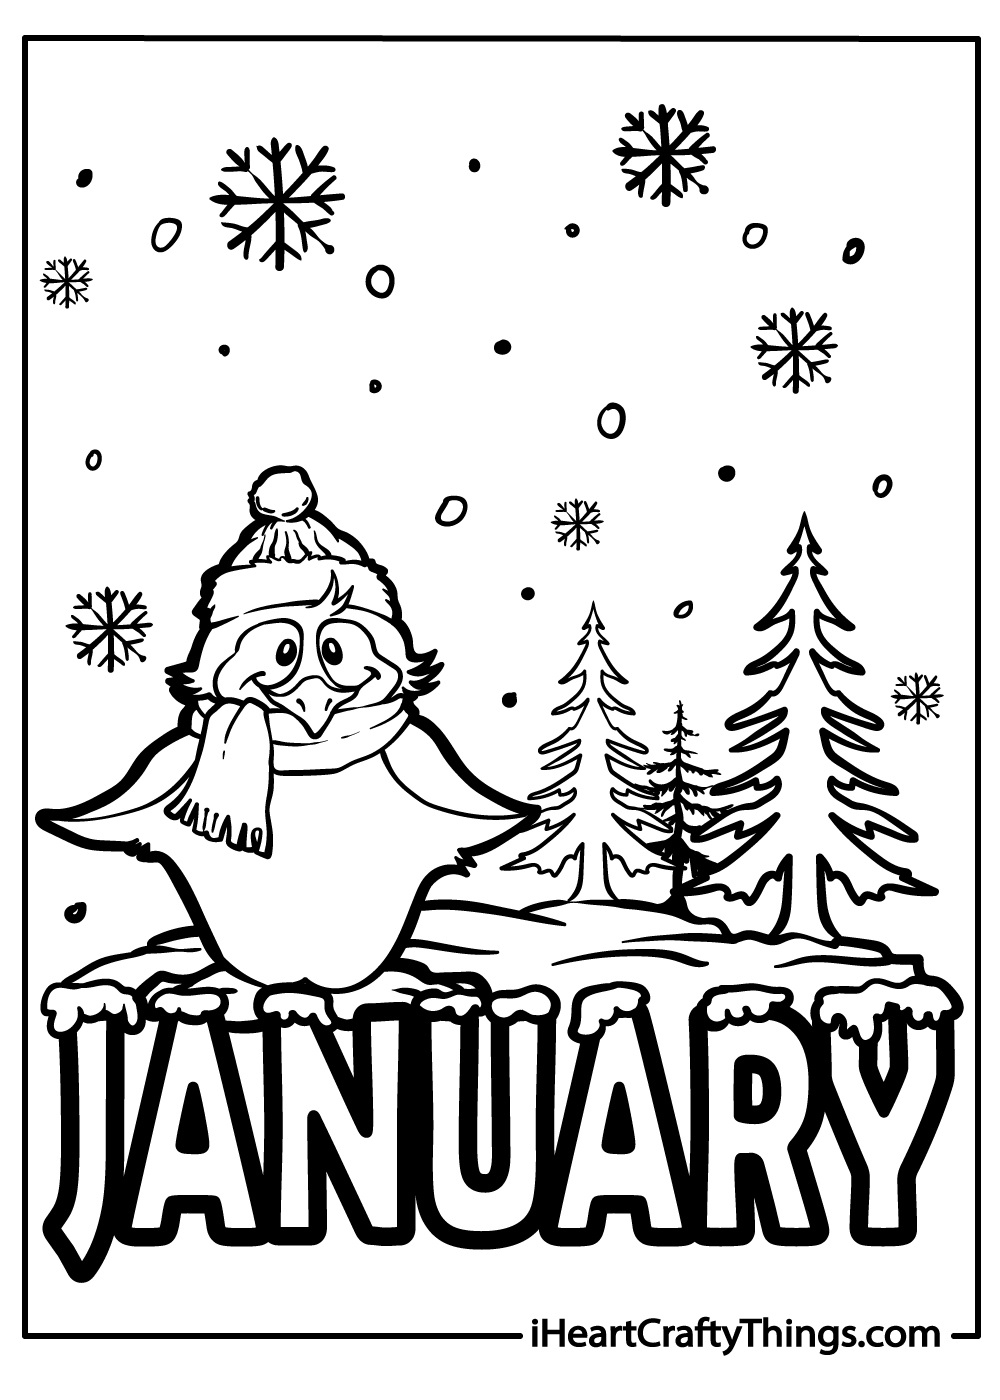 January coloring sheet free pdf download